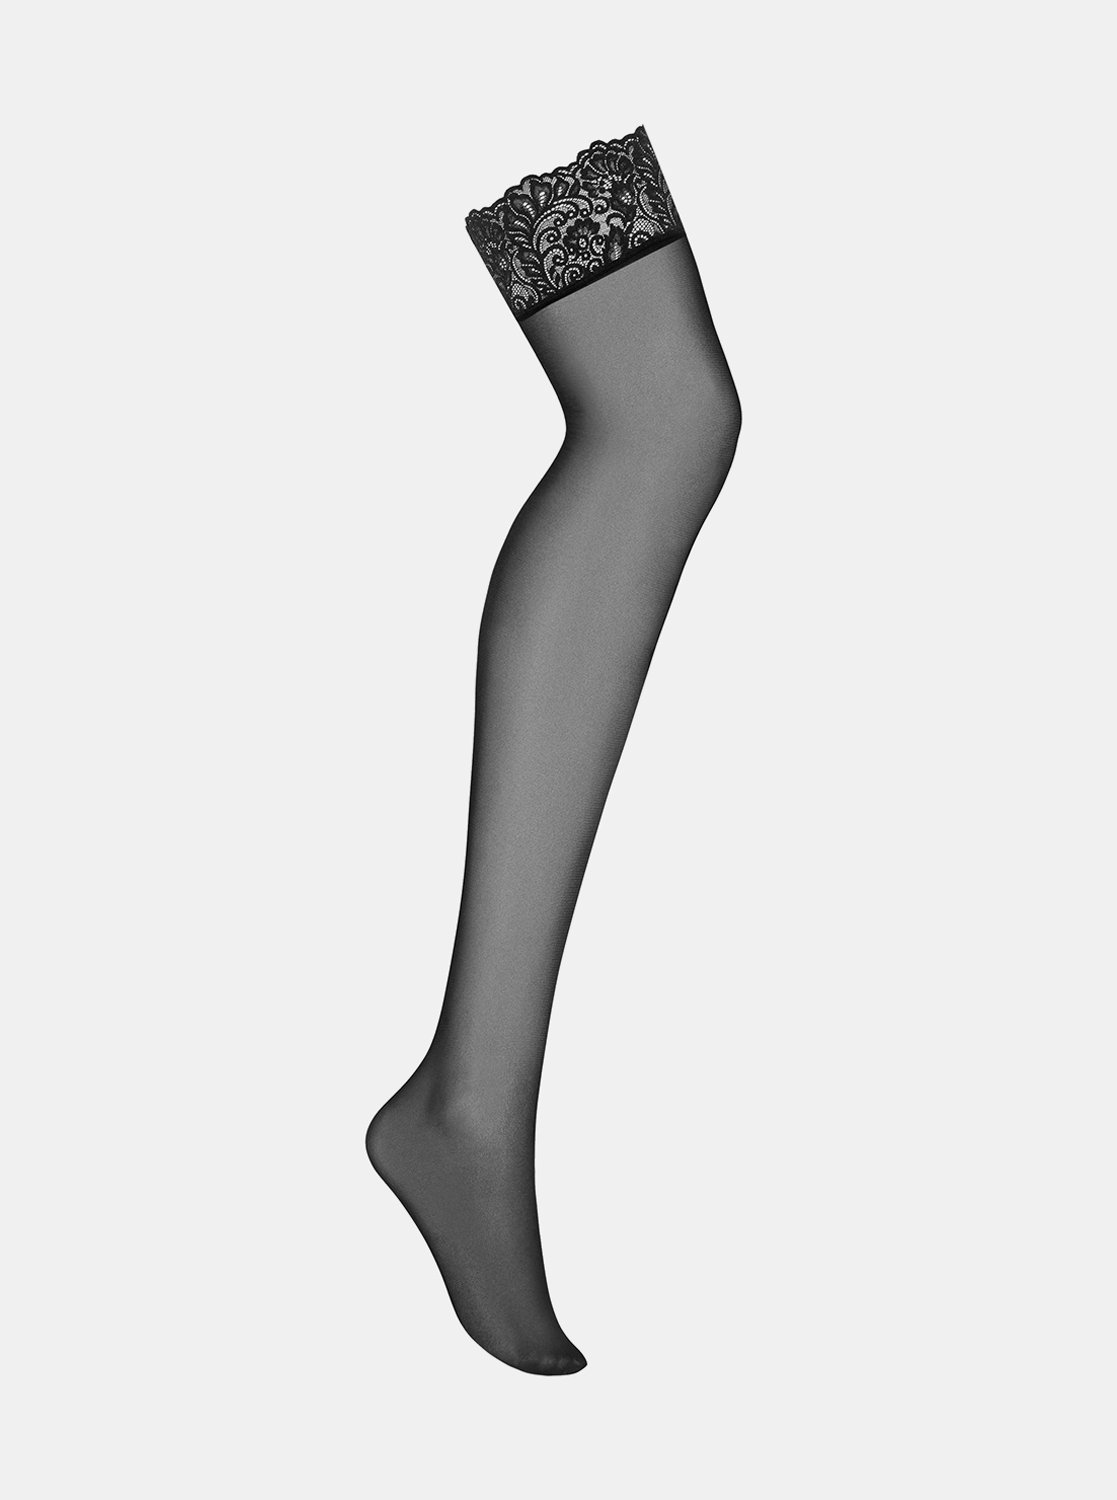 Fotografie Jemné punčochy Bondea stockings - Obsessive černá